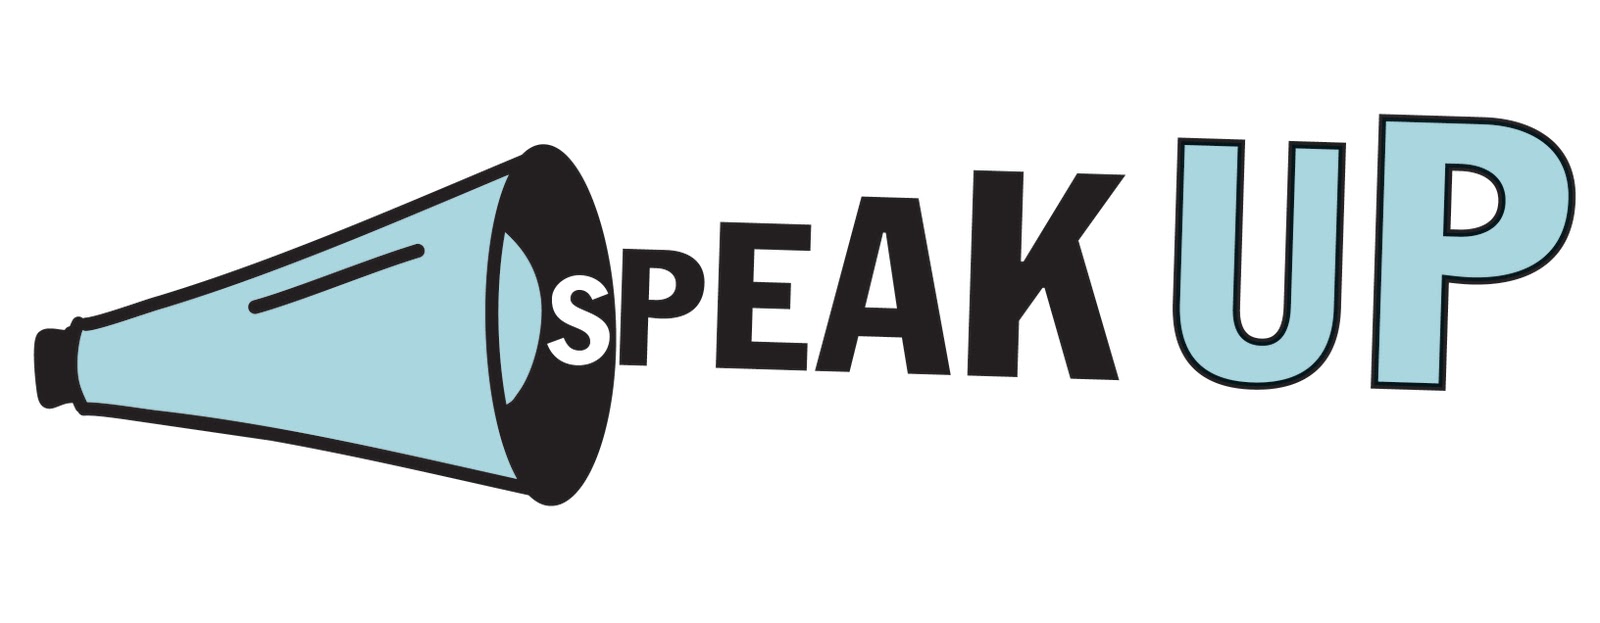 Speak up friends. Speak up. Spauk up. Темы speak up. Speak logo.